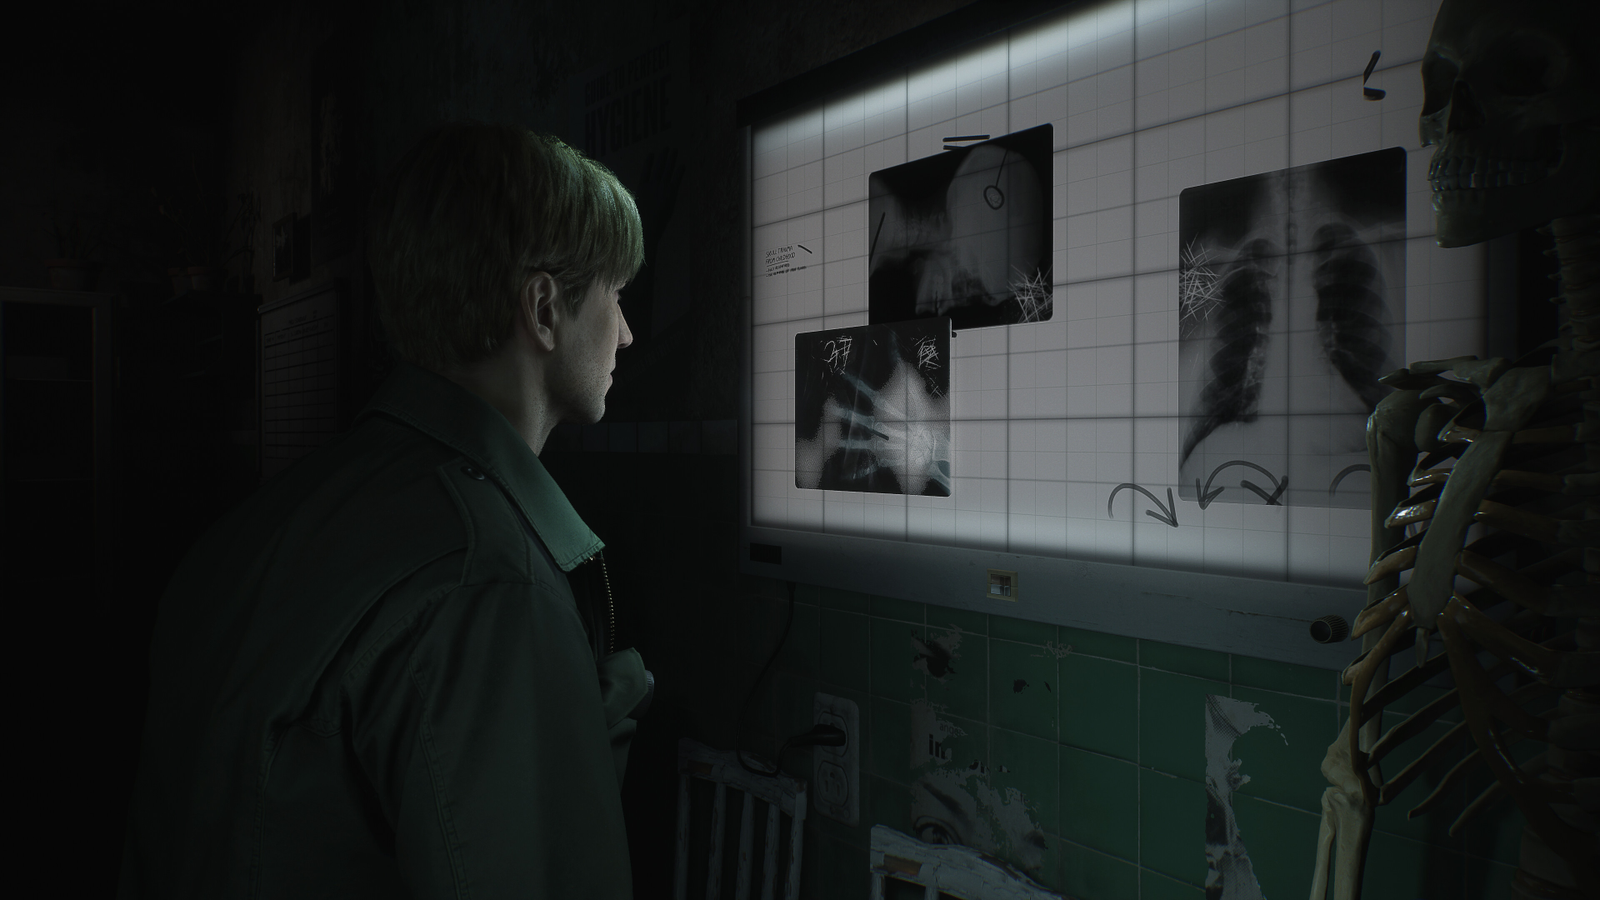 Silent Hill 2 Remake Dev Responds To Lack Of Communication